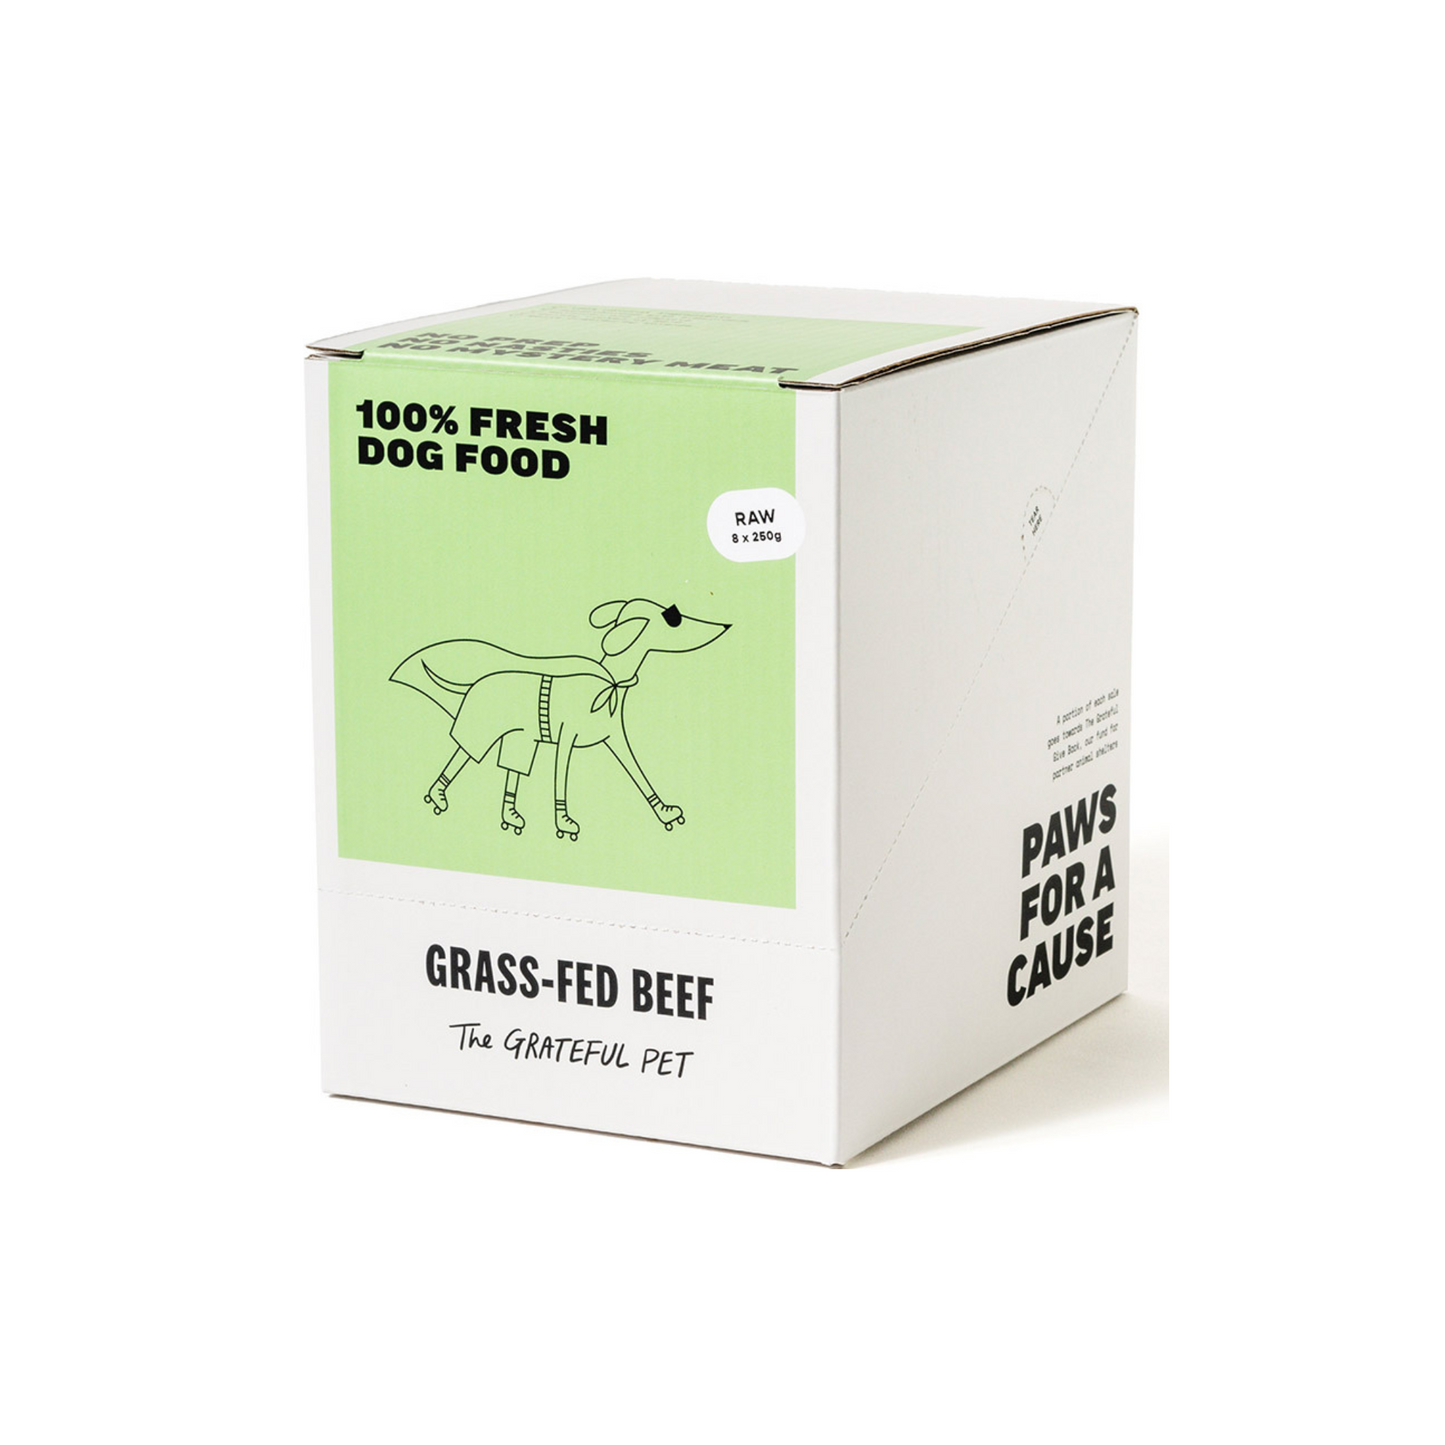 [BUNDLE DEAL] The Grateful Pet Raw Dog Food 2kg Case x 2